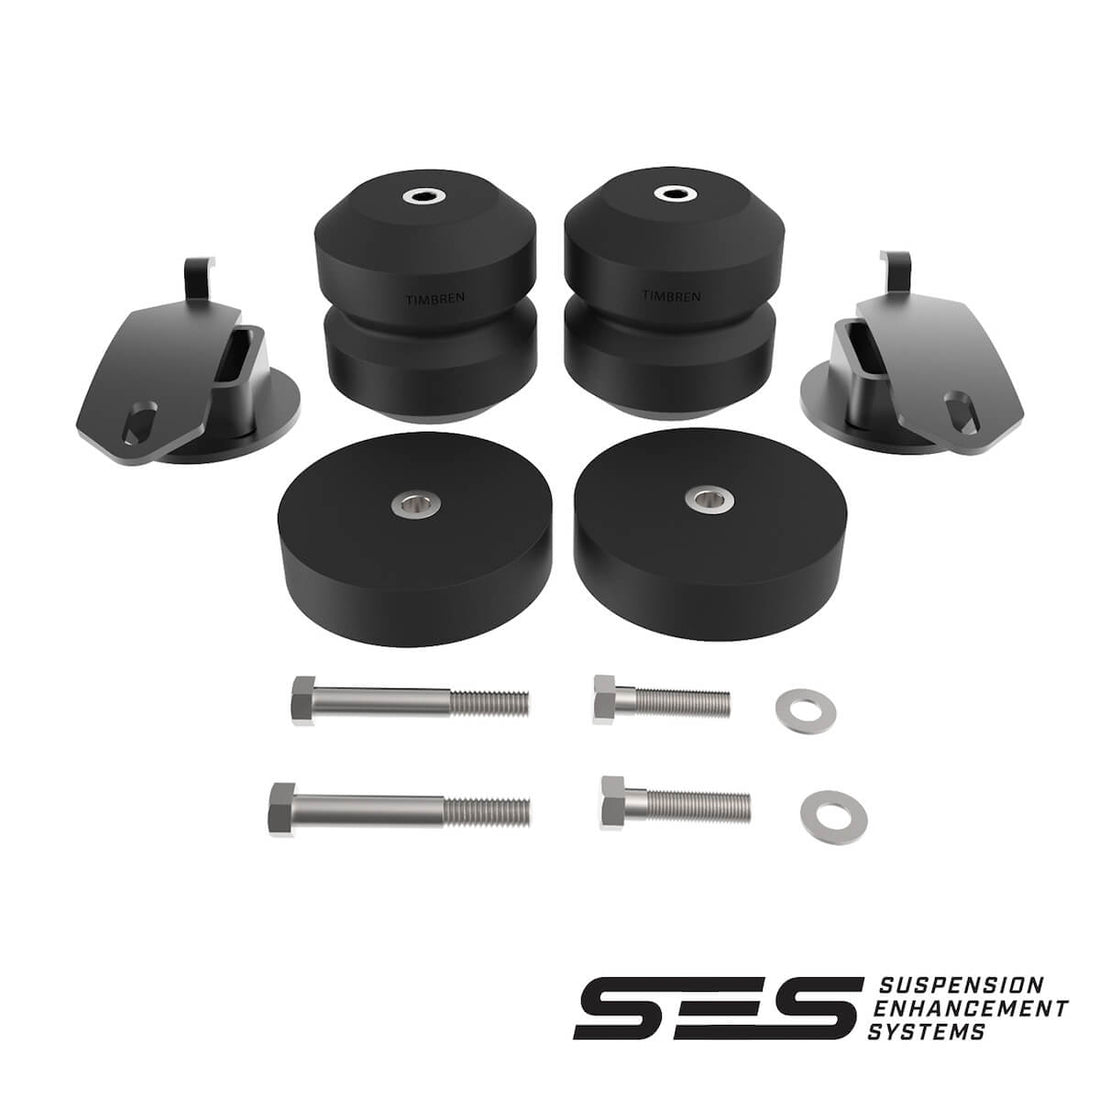 Timbren SES Suspension Enhancement System SKU# DDR00 - rear kit